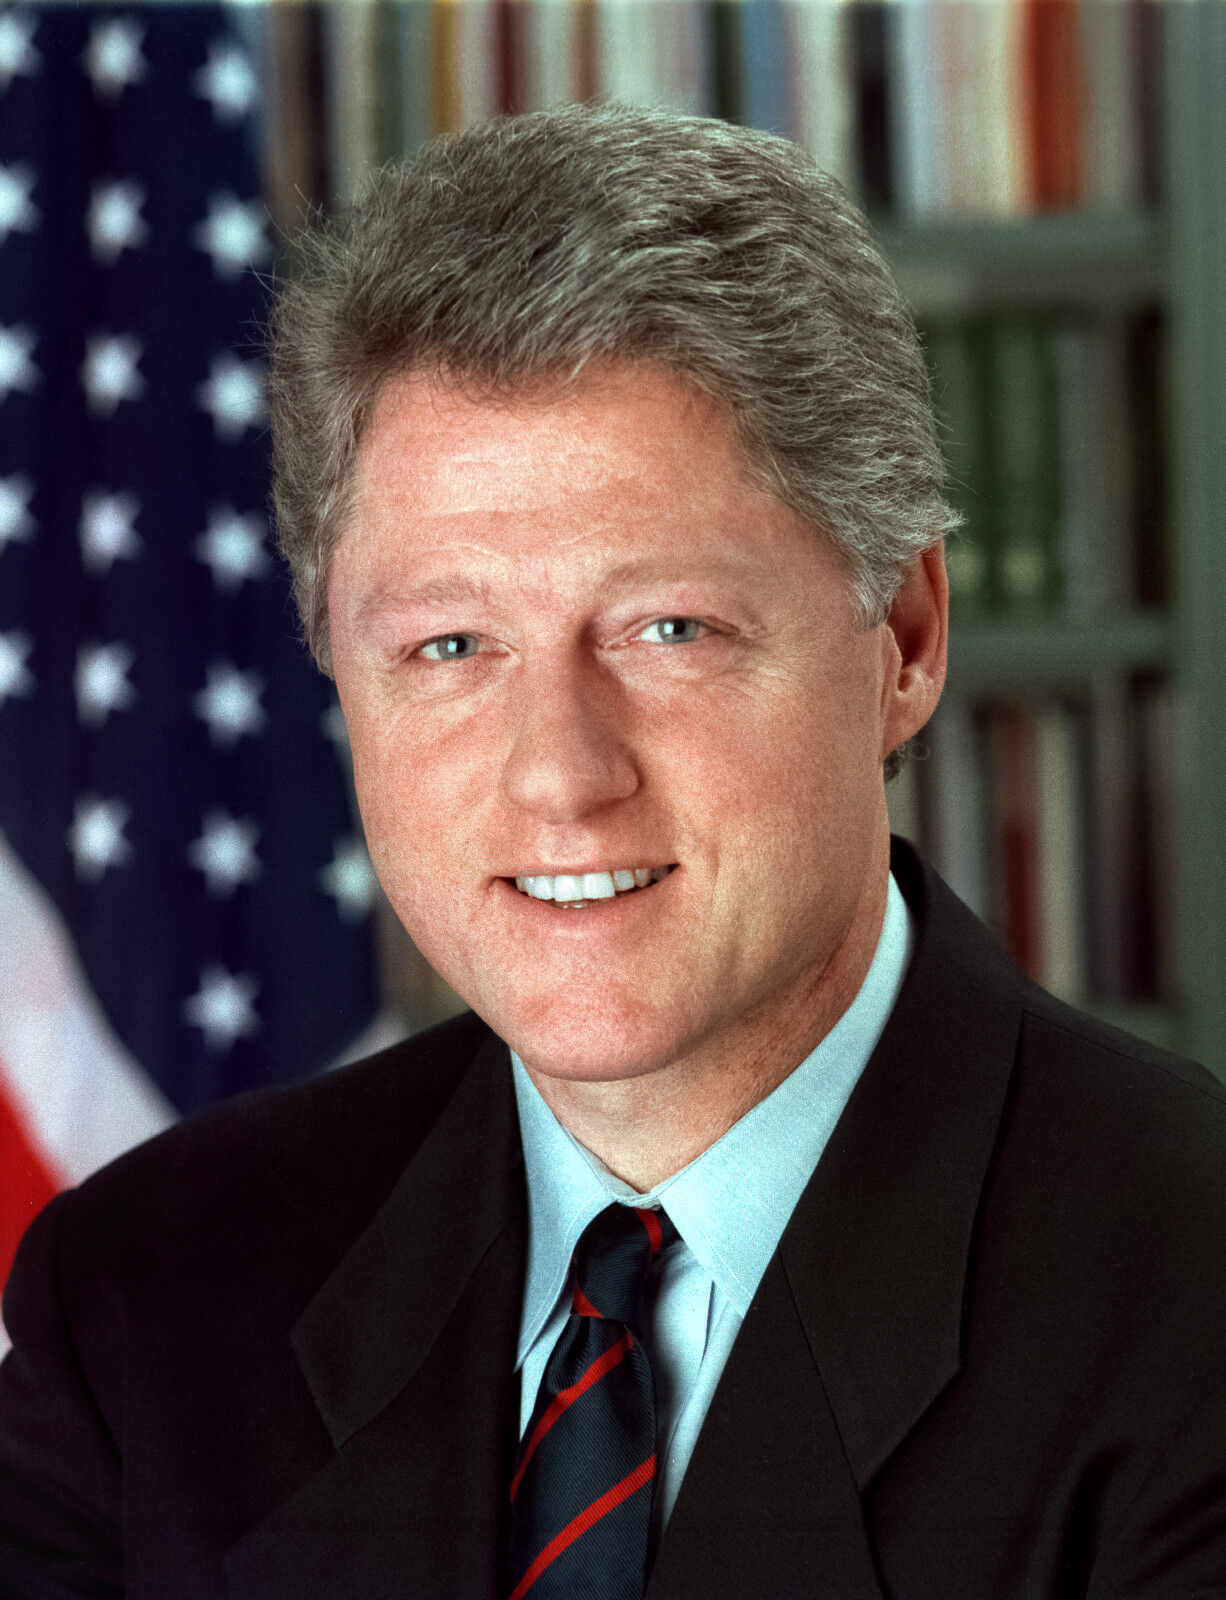 Bill Clinton White House US President Photograph POTUS -17\